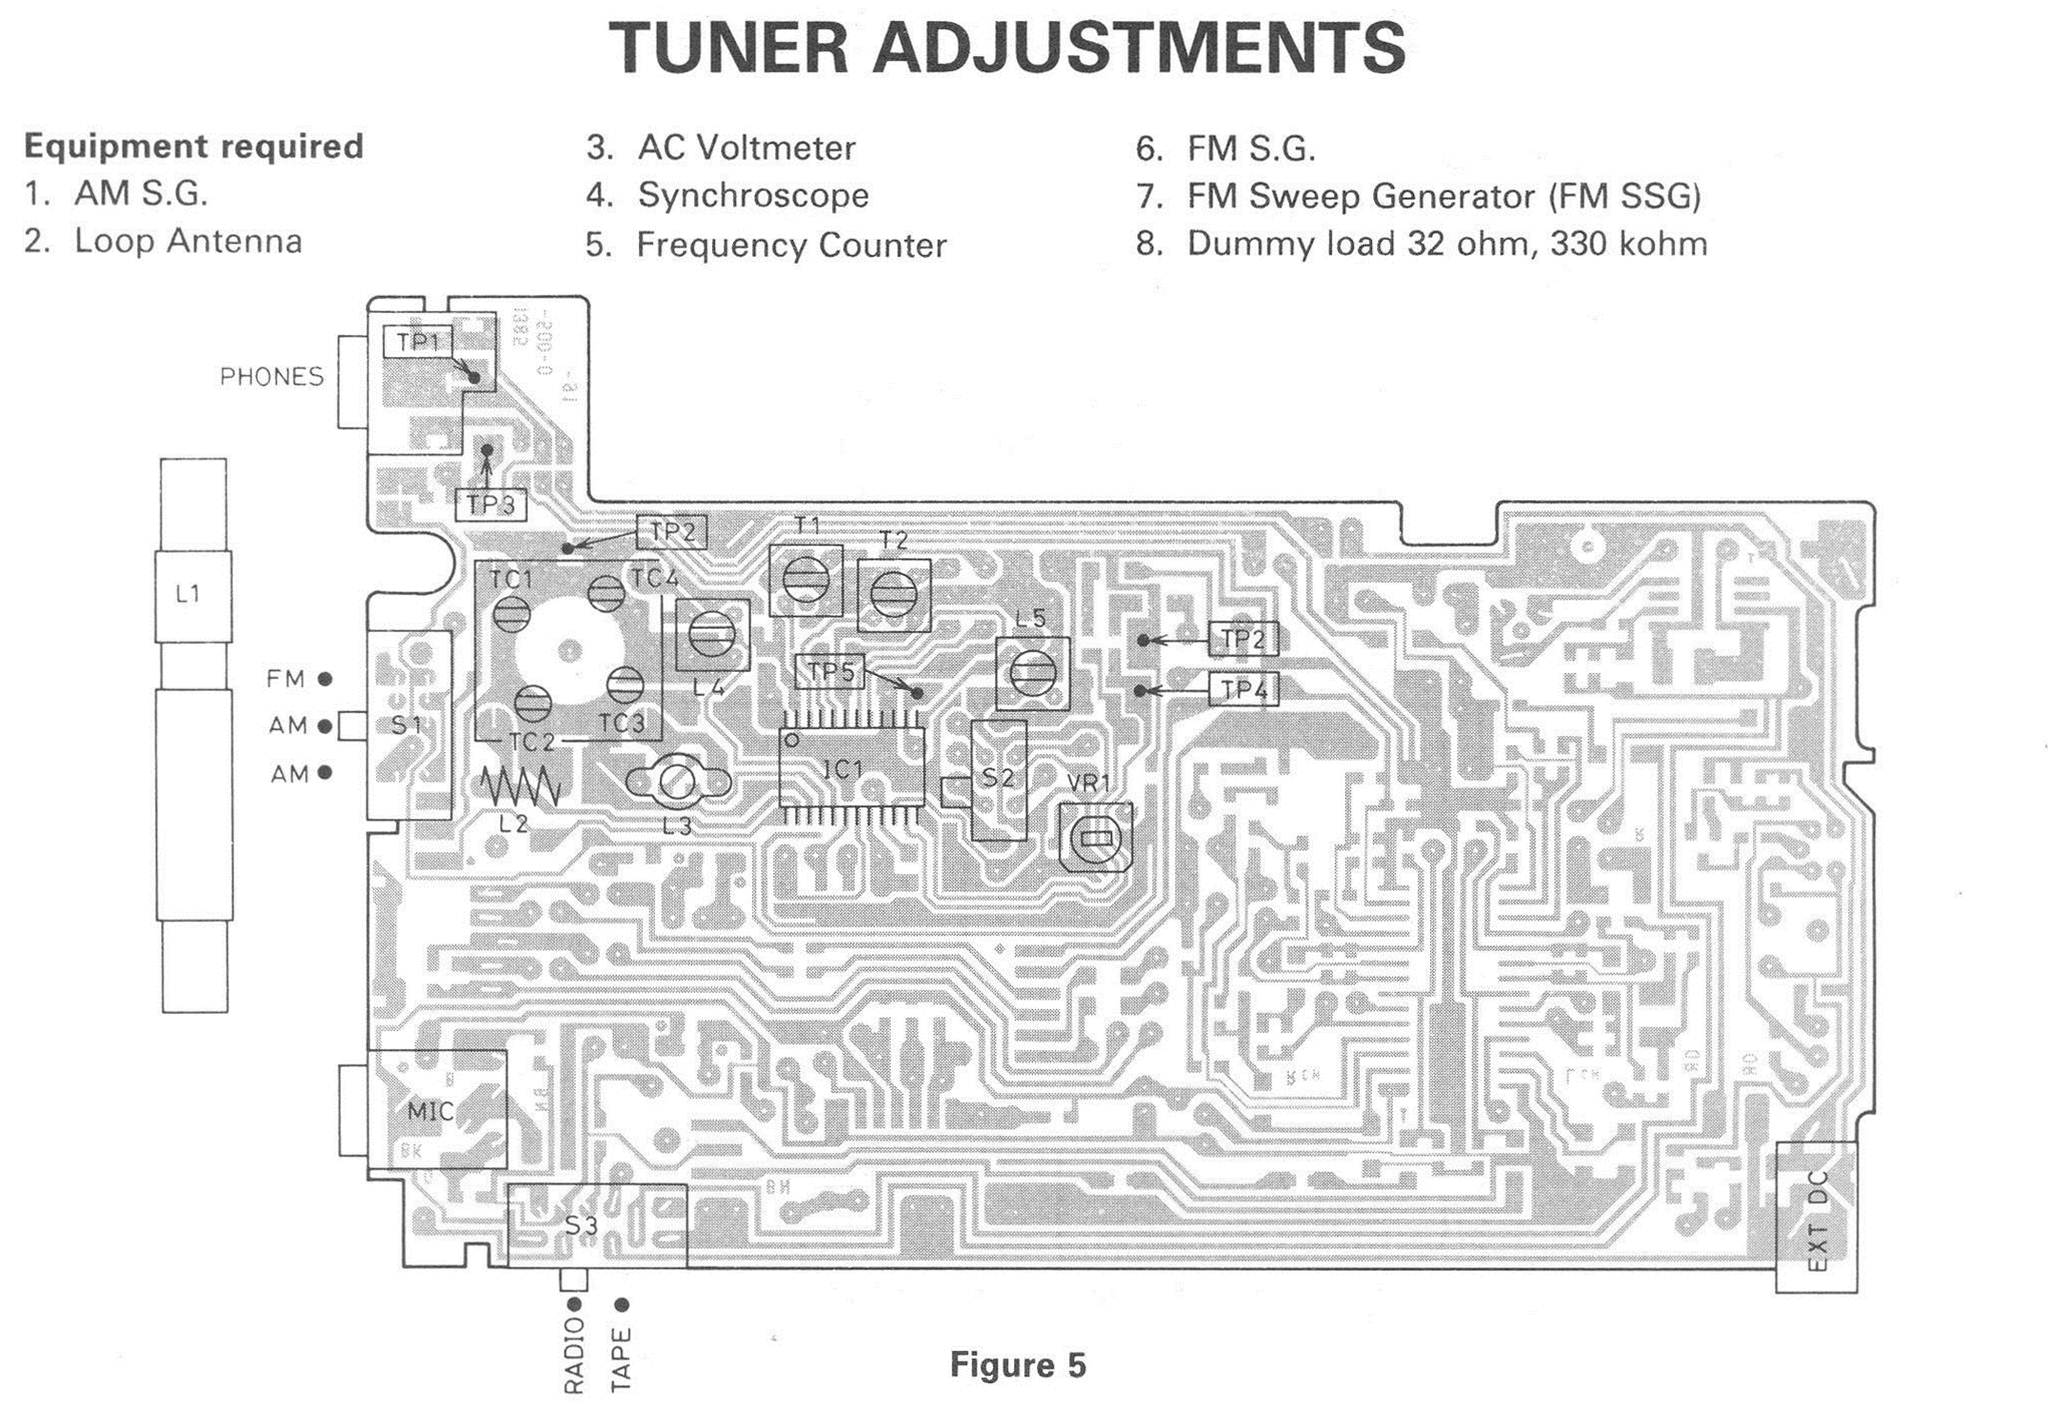 Tuner Adjustments